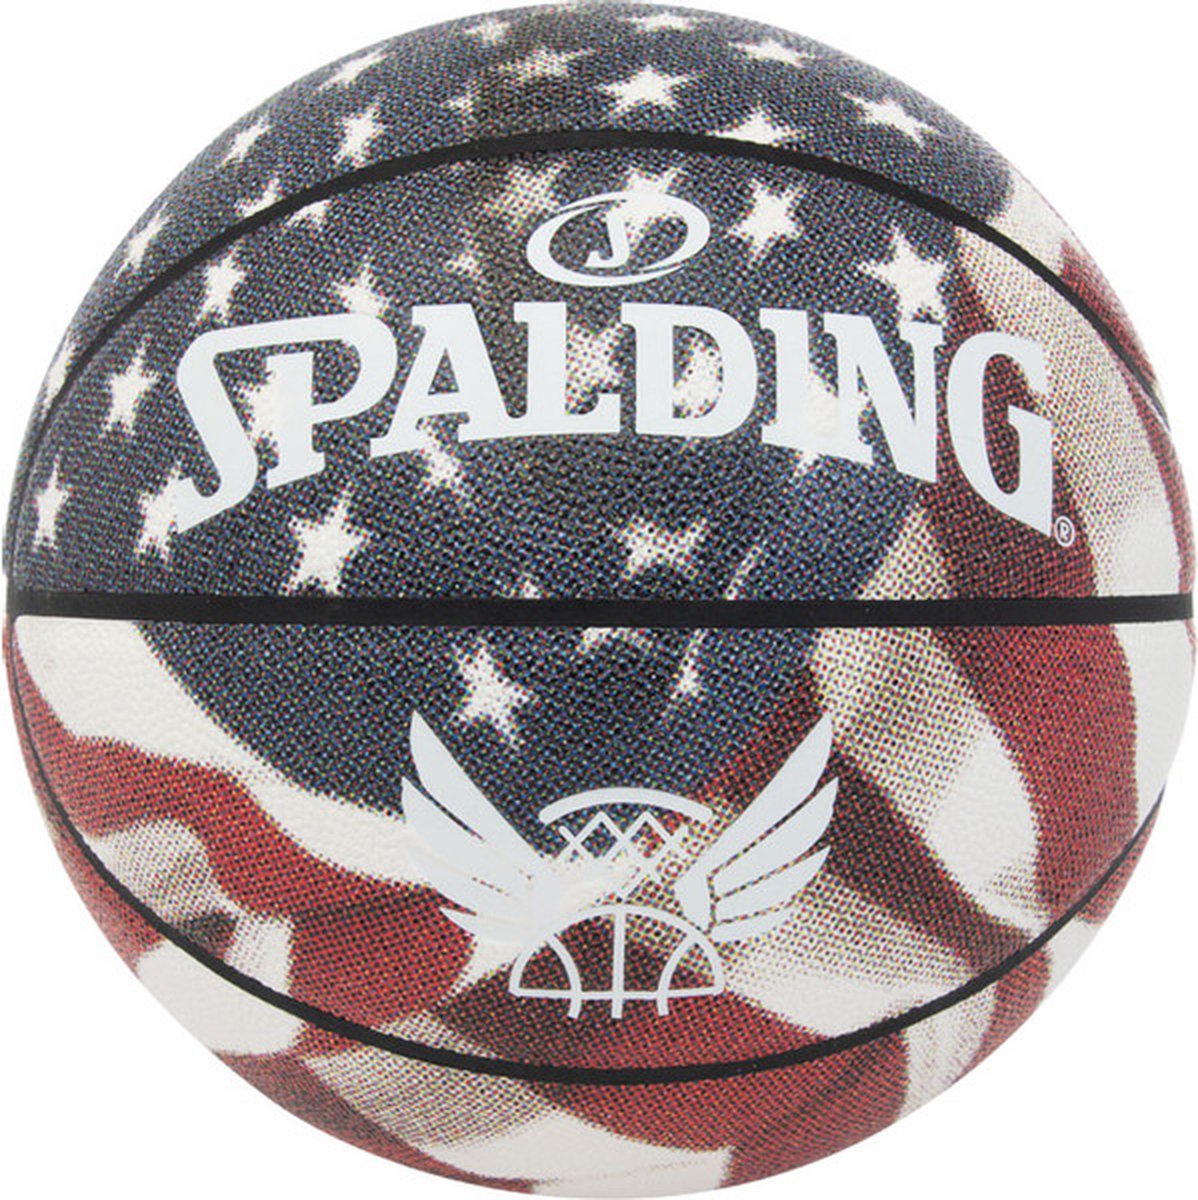 Spalding Flight Series Star & Stripes Composite - basketbal - rood/blauw